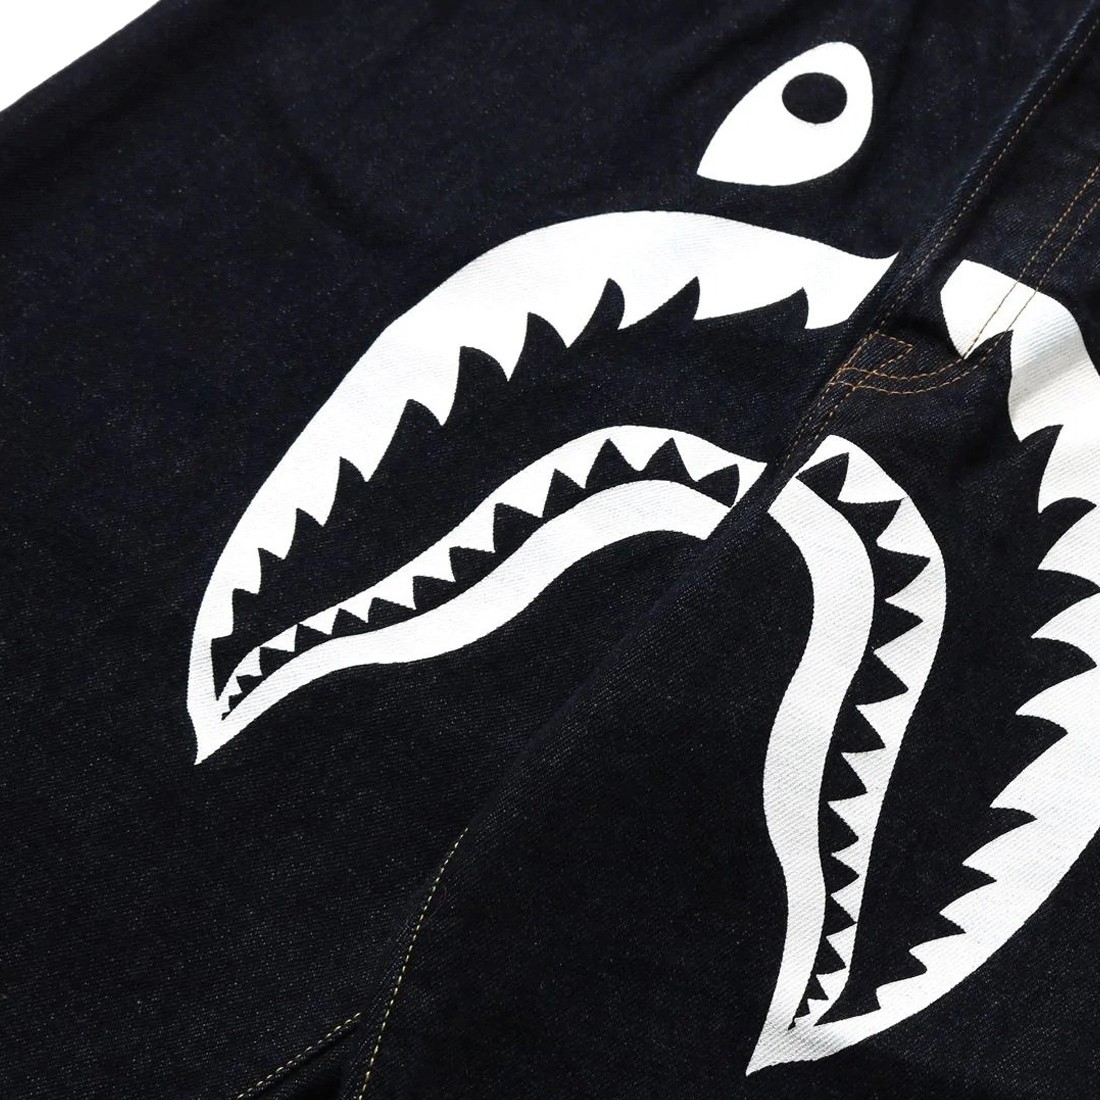 BAPE: Indigo Shark Jeans